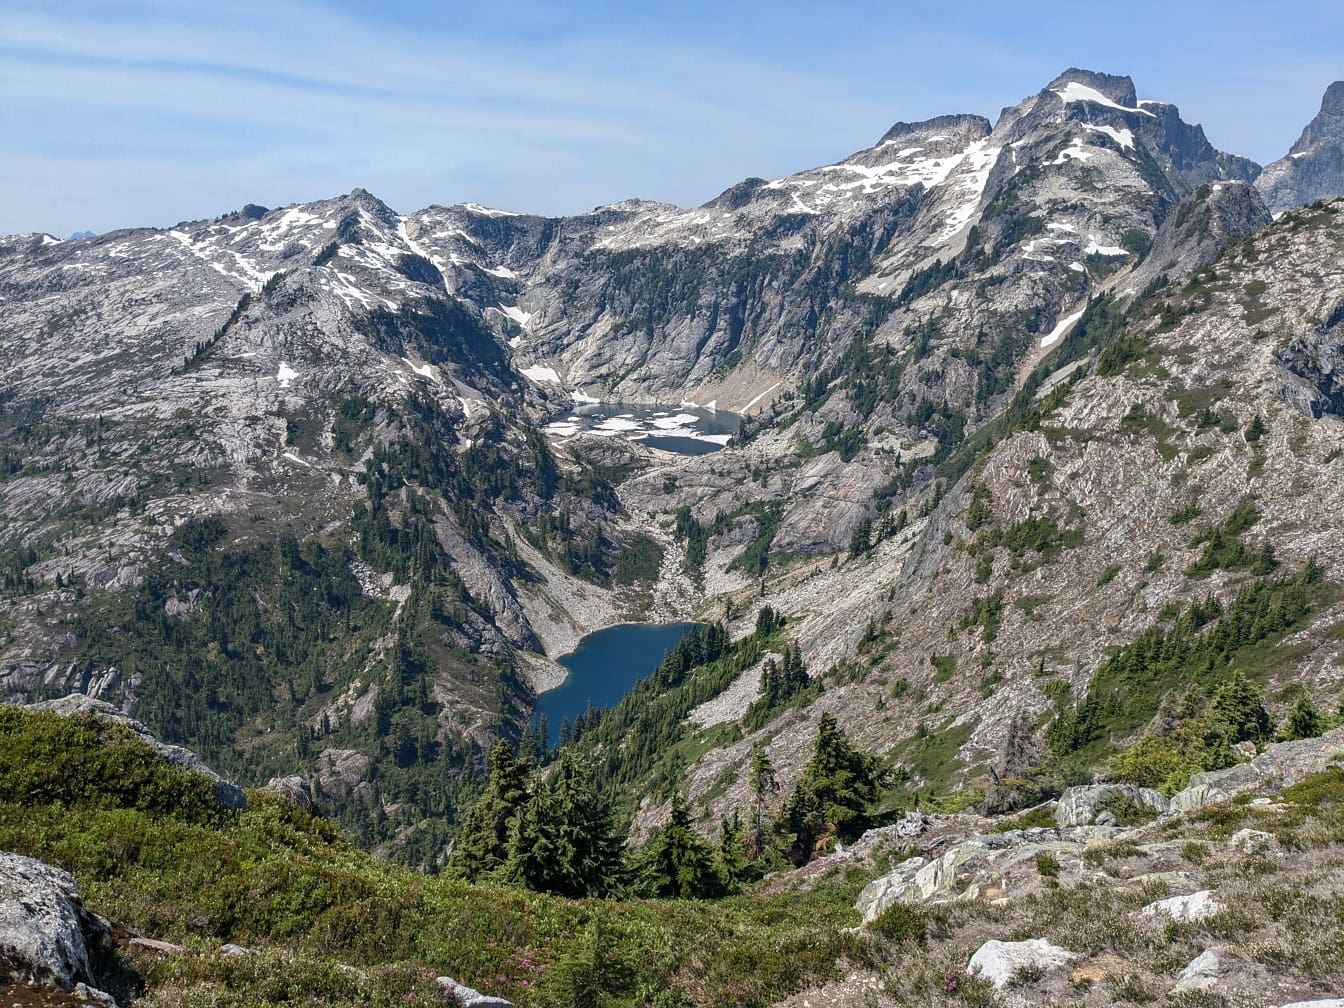 Lanskap pegunungan dengan danau Thornton di tengah di taman nasional North Cascades di Washington